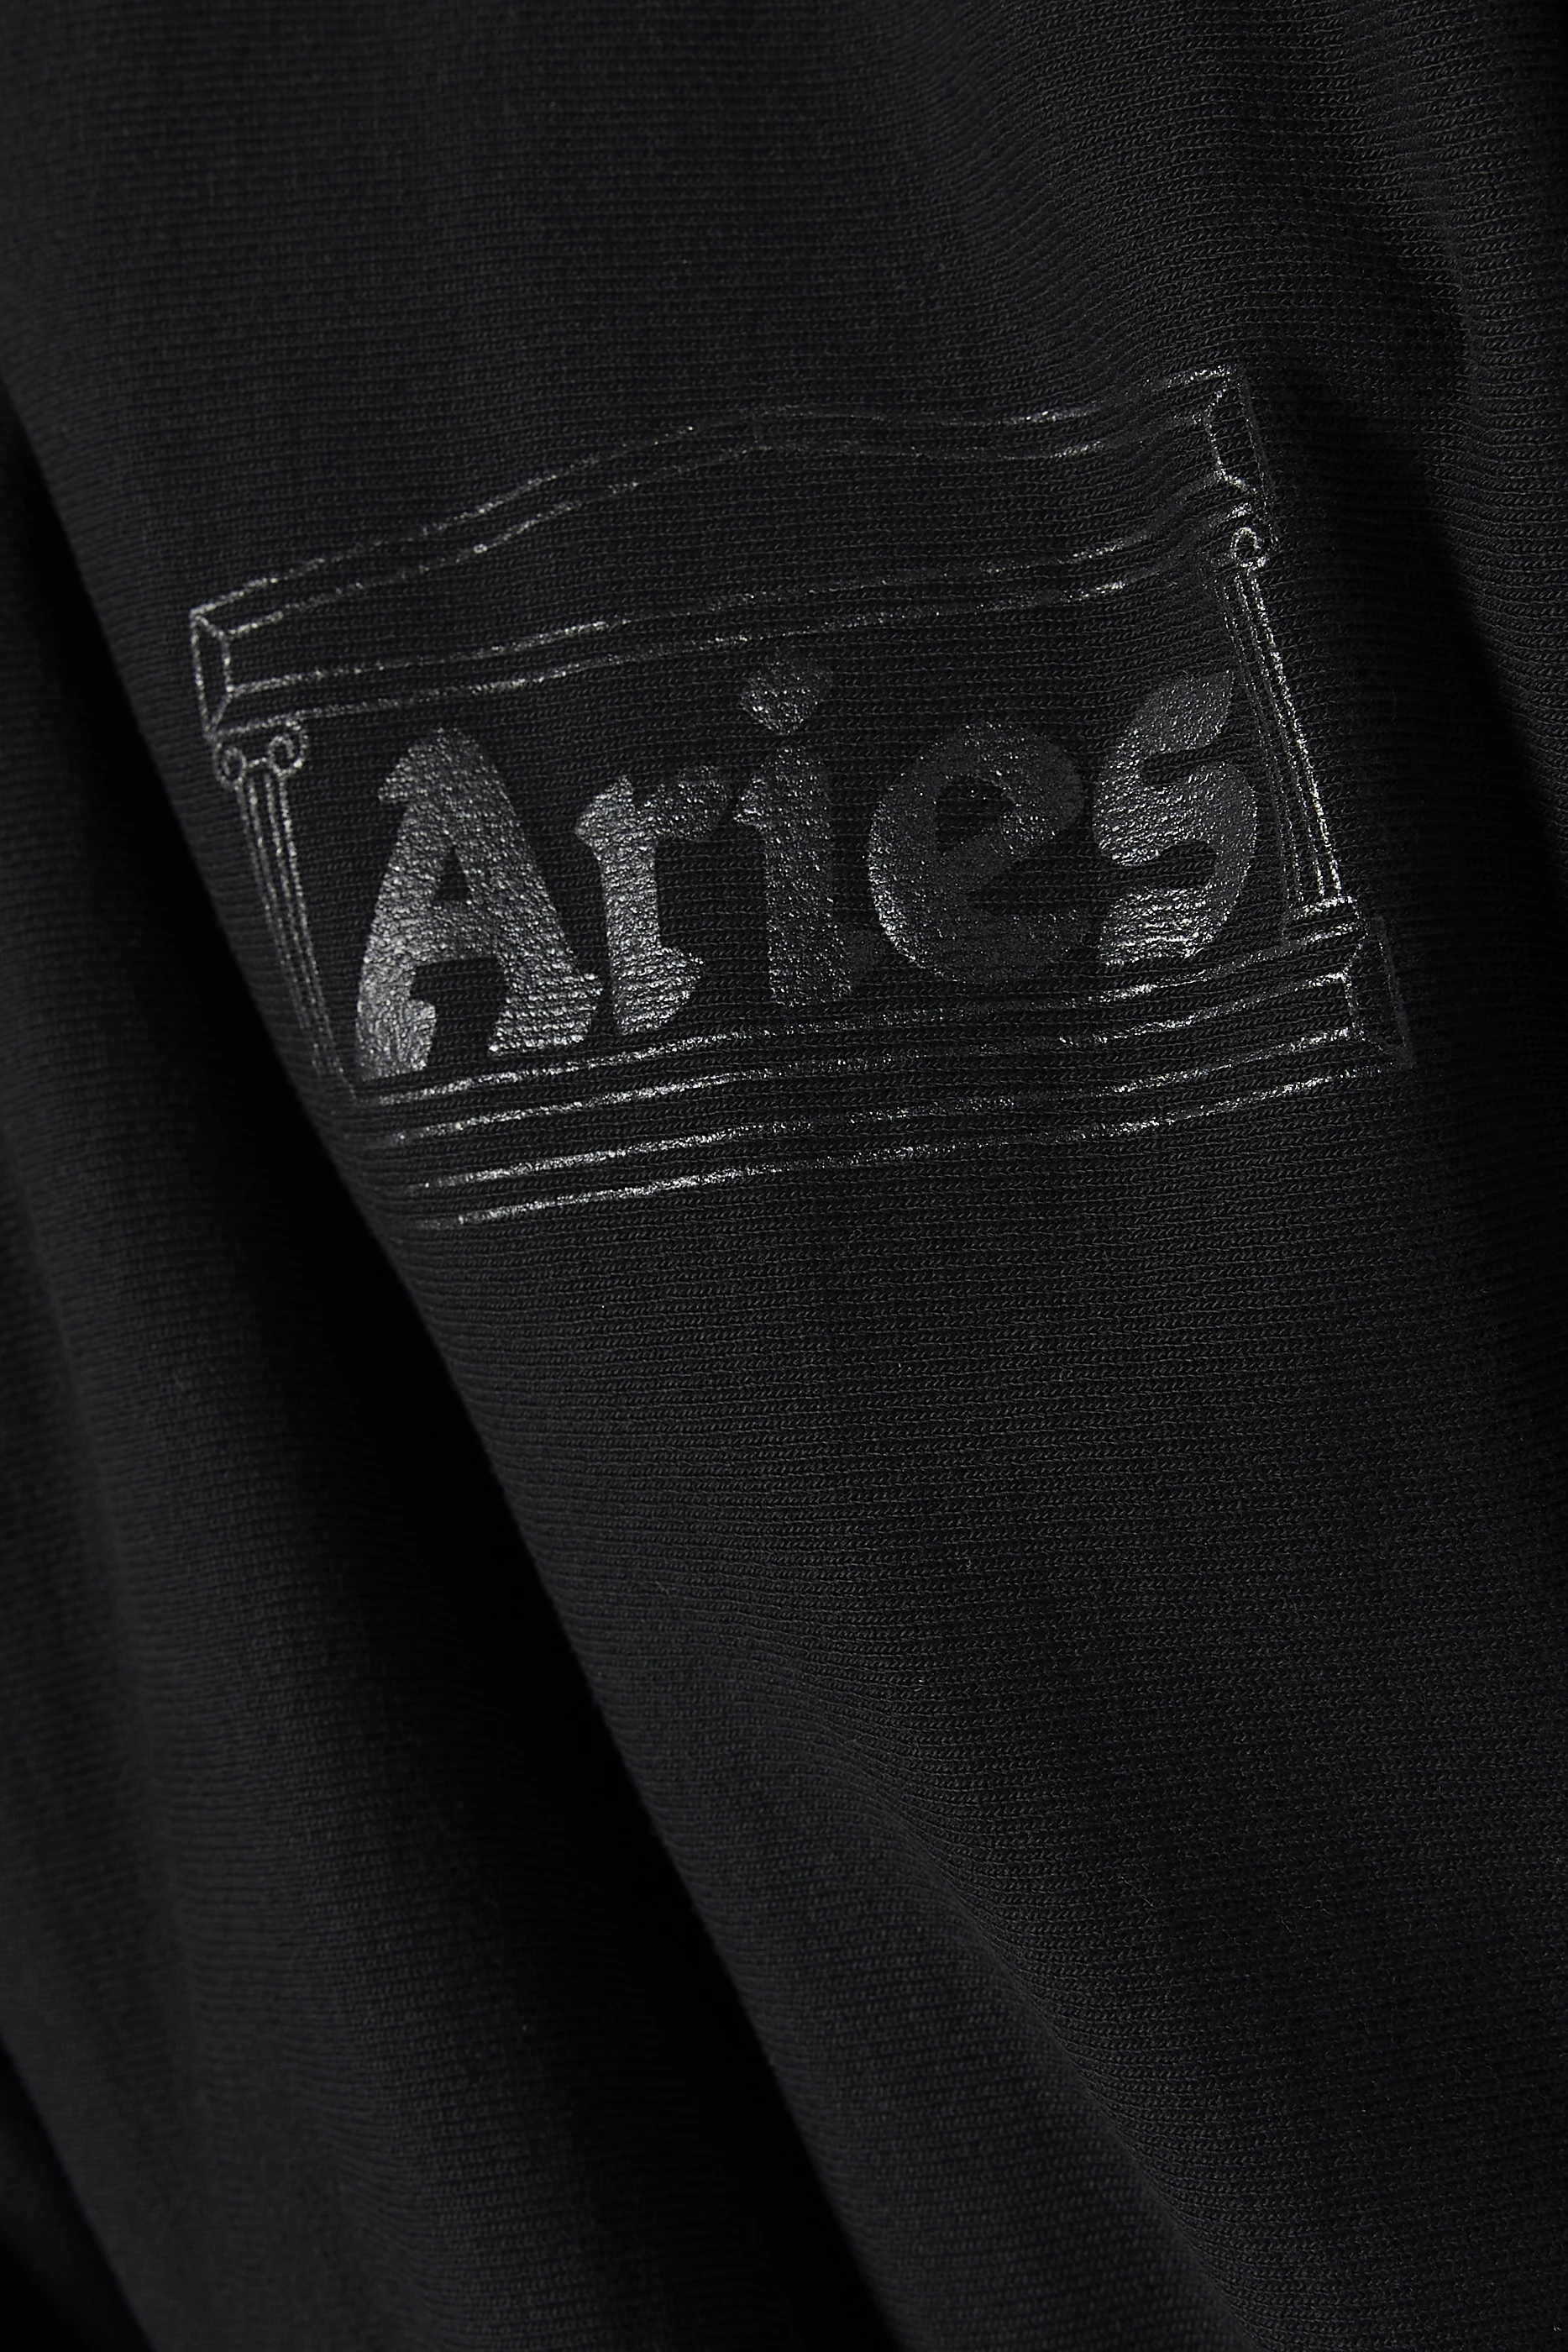 Aries Arise Column Sweatshirt in Black